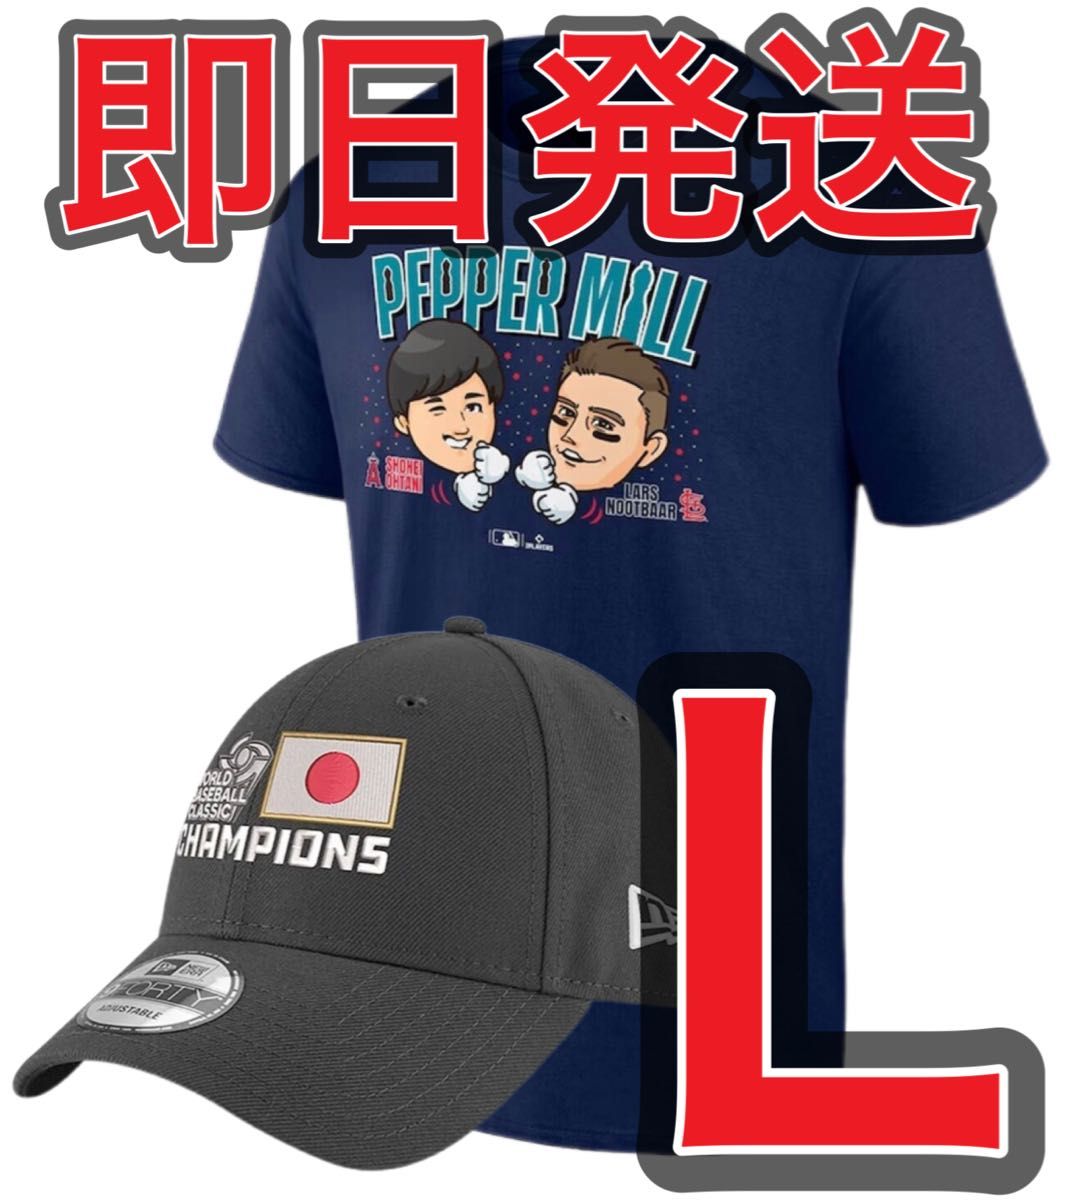 WBC優勝記念 大谷翔平選手・ヌートバー選手 特製ペッパーミル Tシャツ